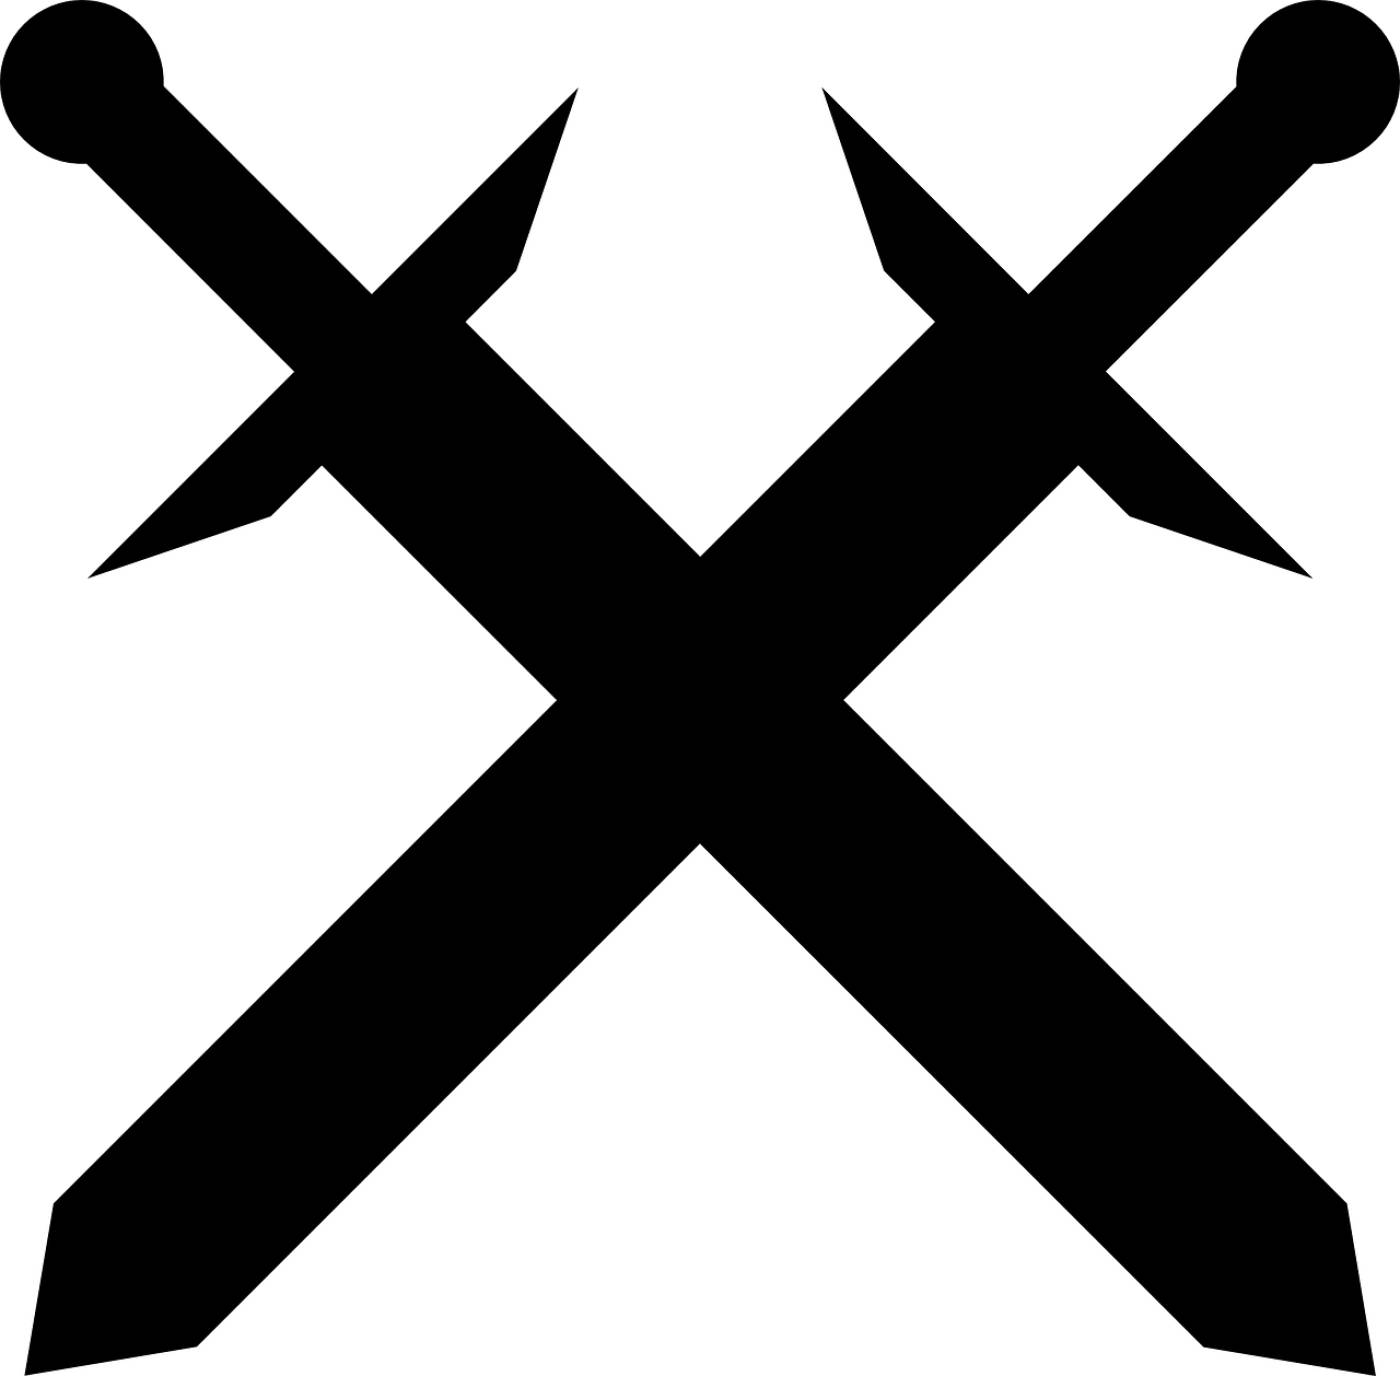 swords crossed medieval old knight  svg vector